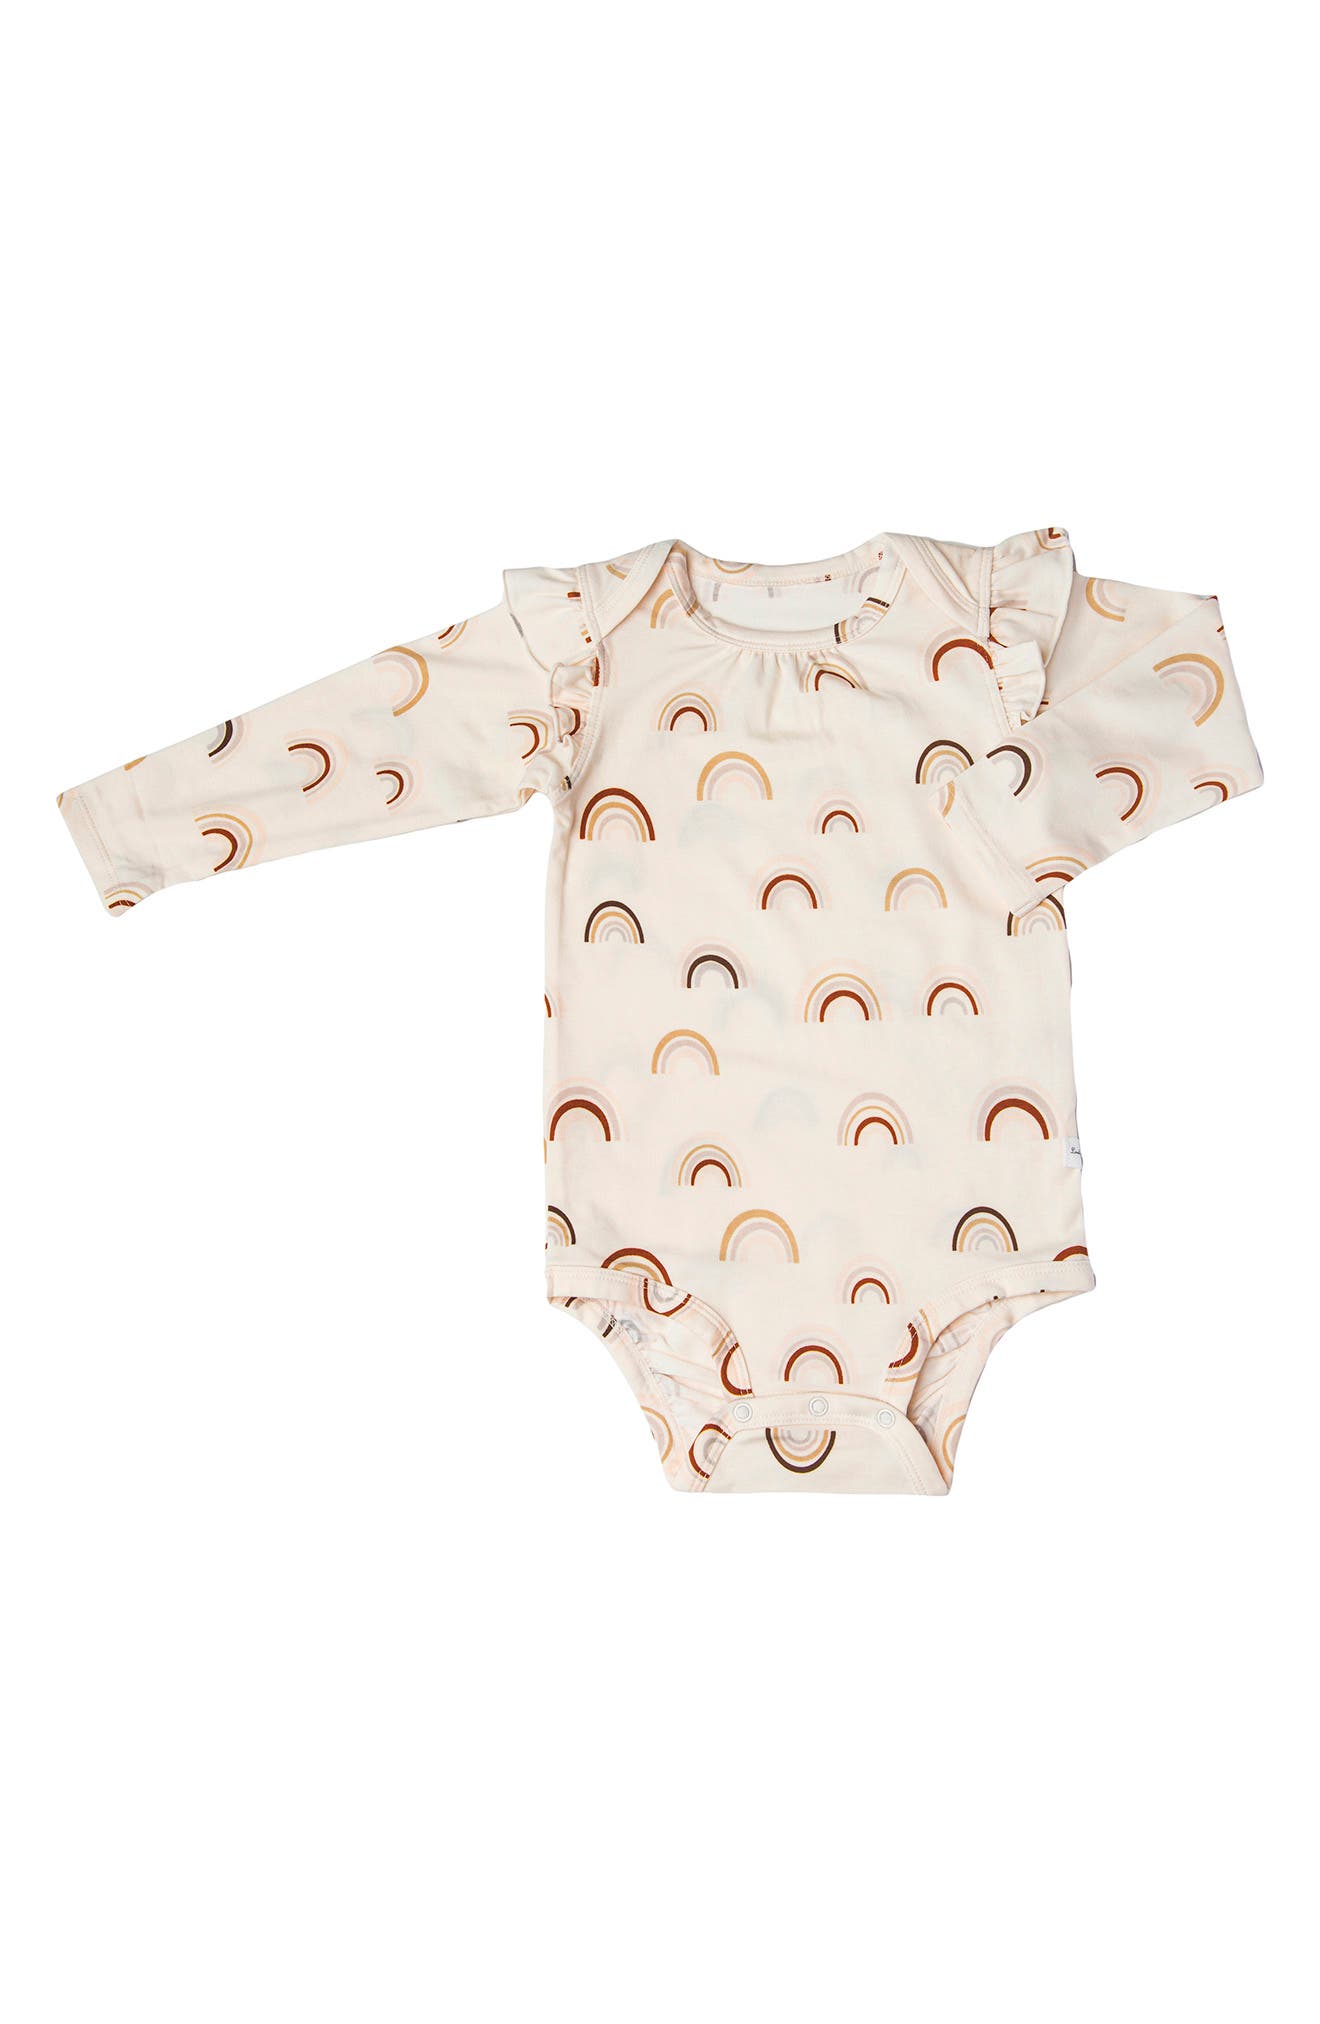 Piccalilly Plain Cream Baby Bodysuit with Ruffles Organic Cotton Jersey Slub